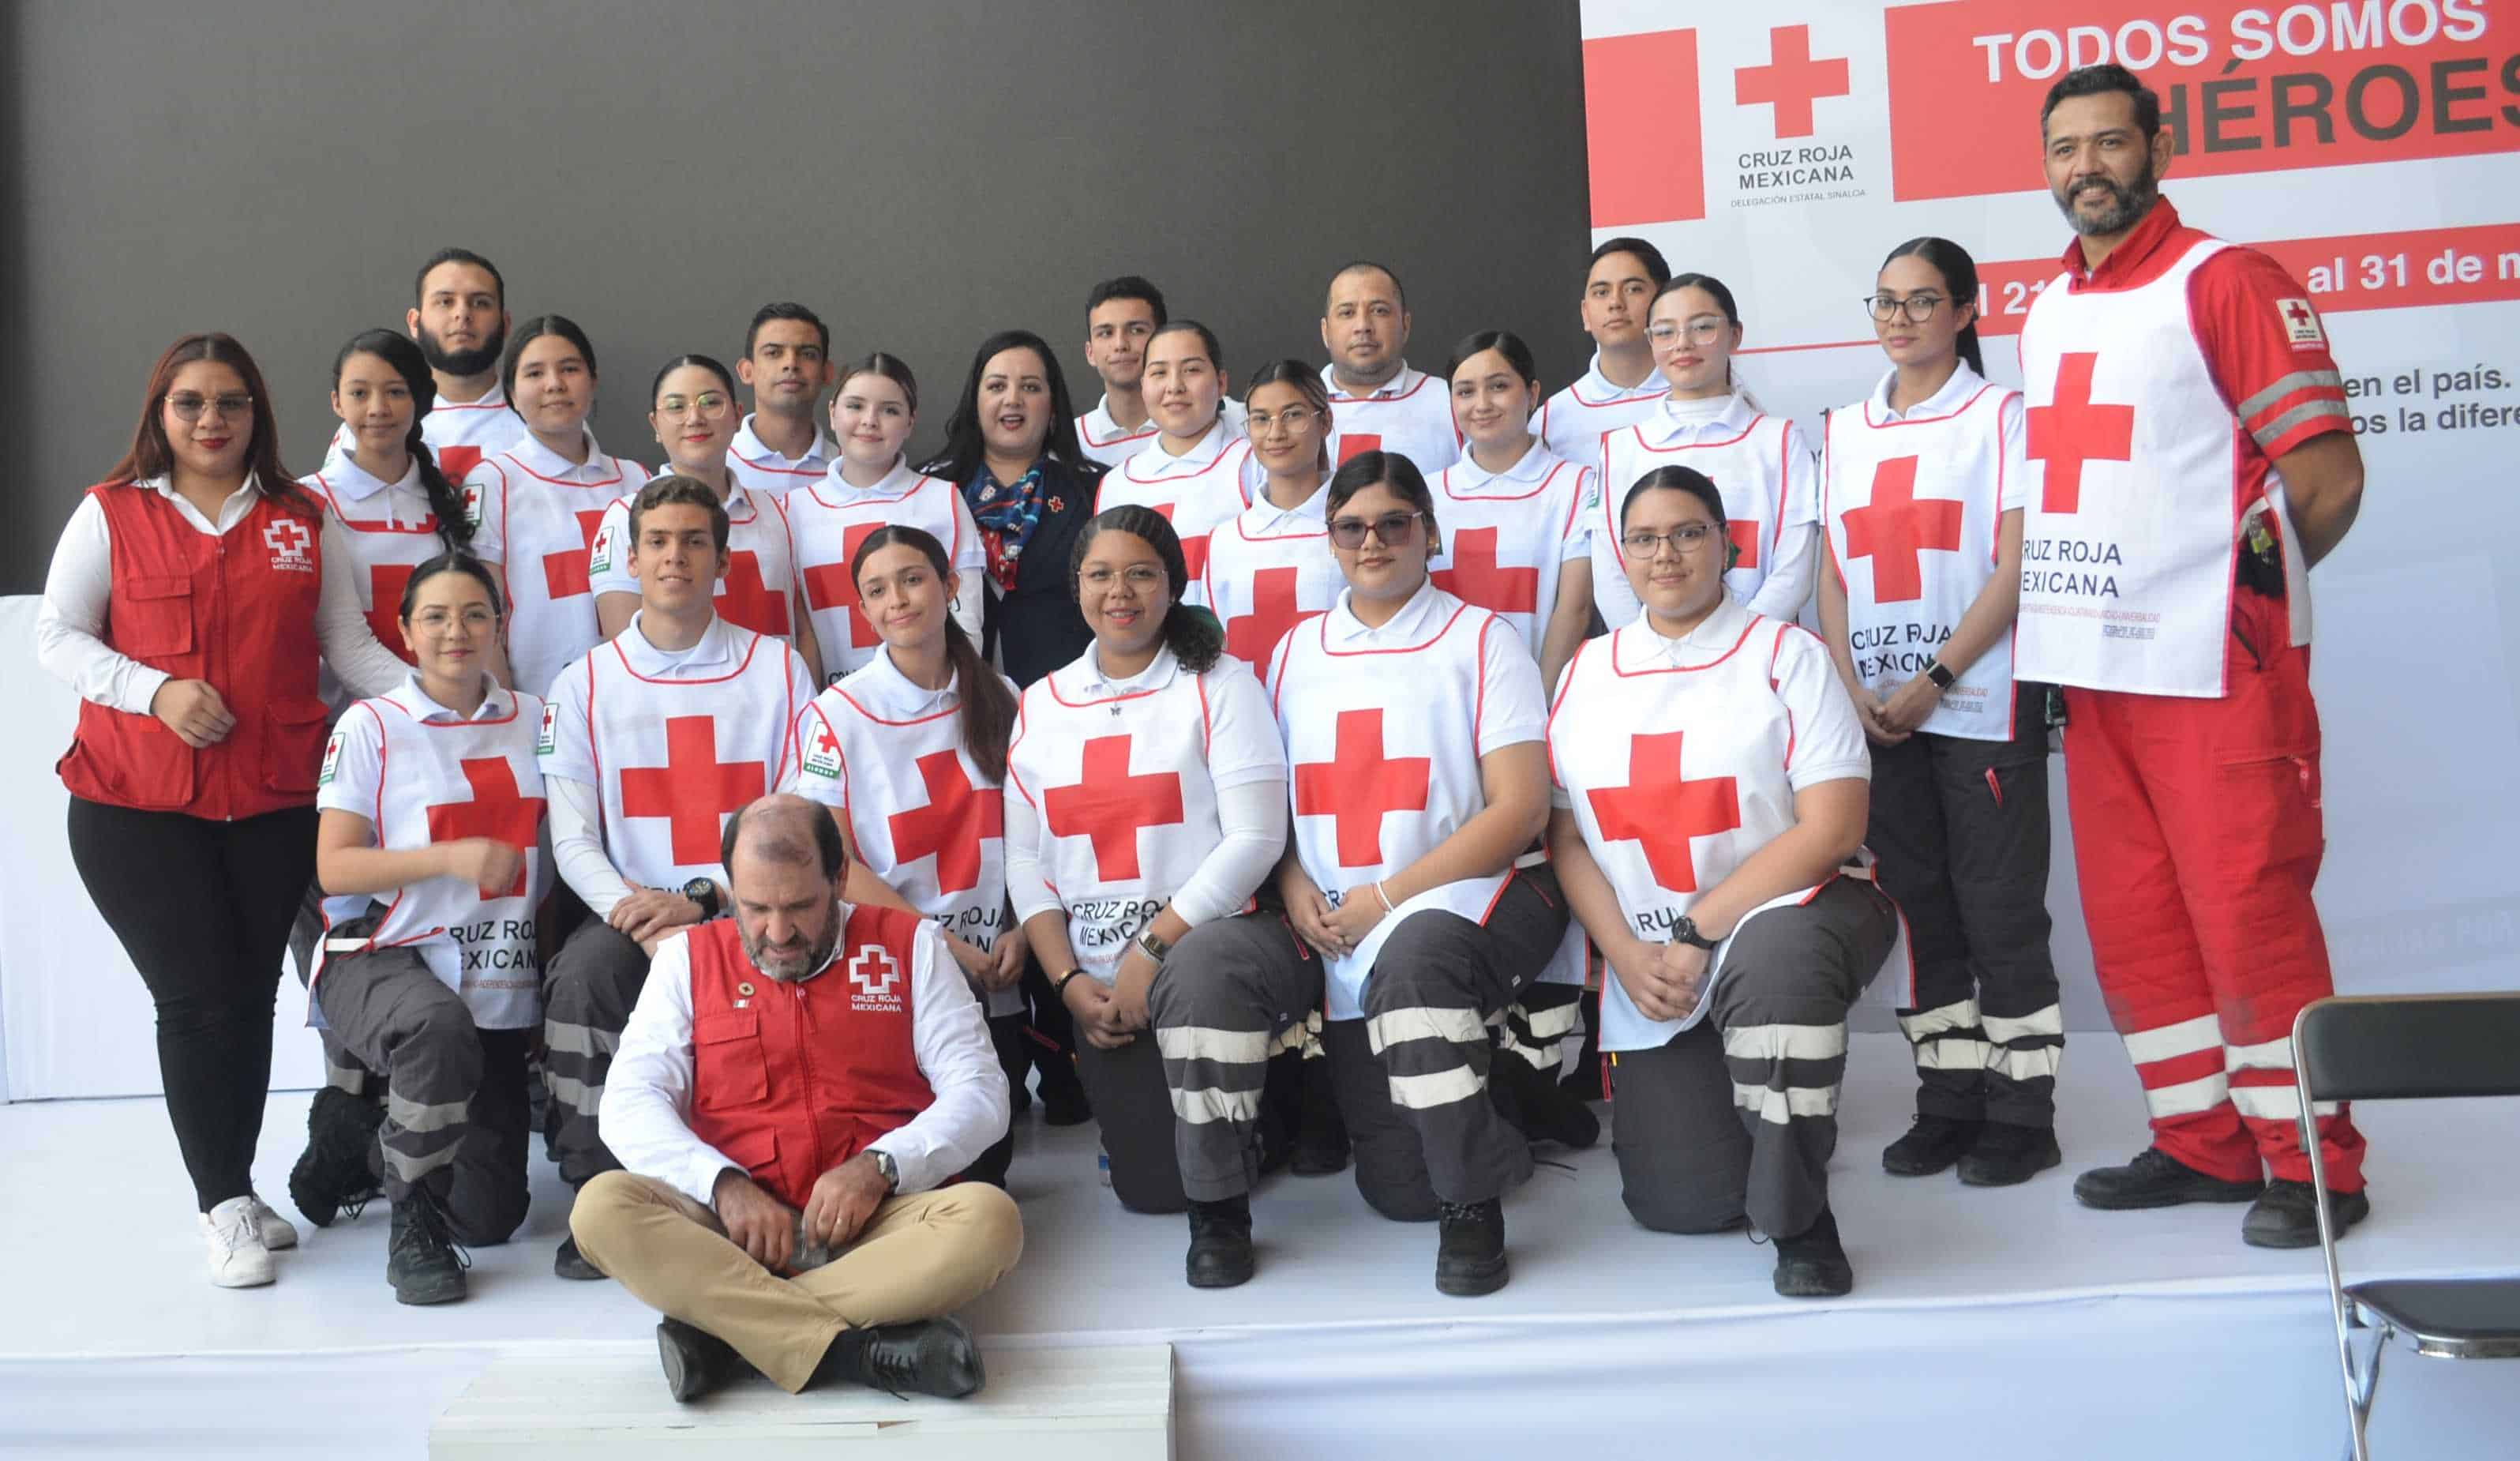 Inicio de la colecta de Cruz Roja Sinaloa